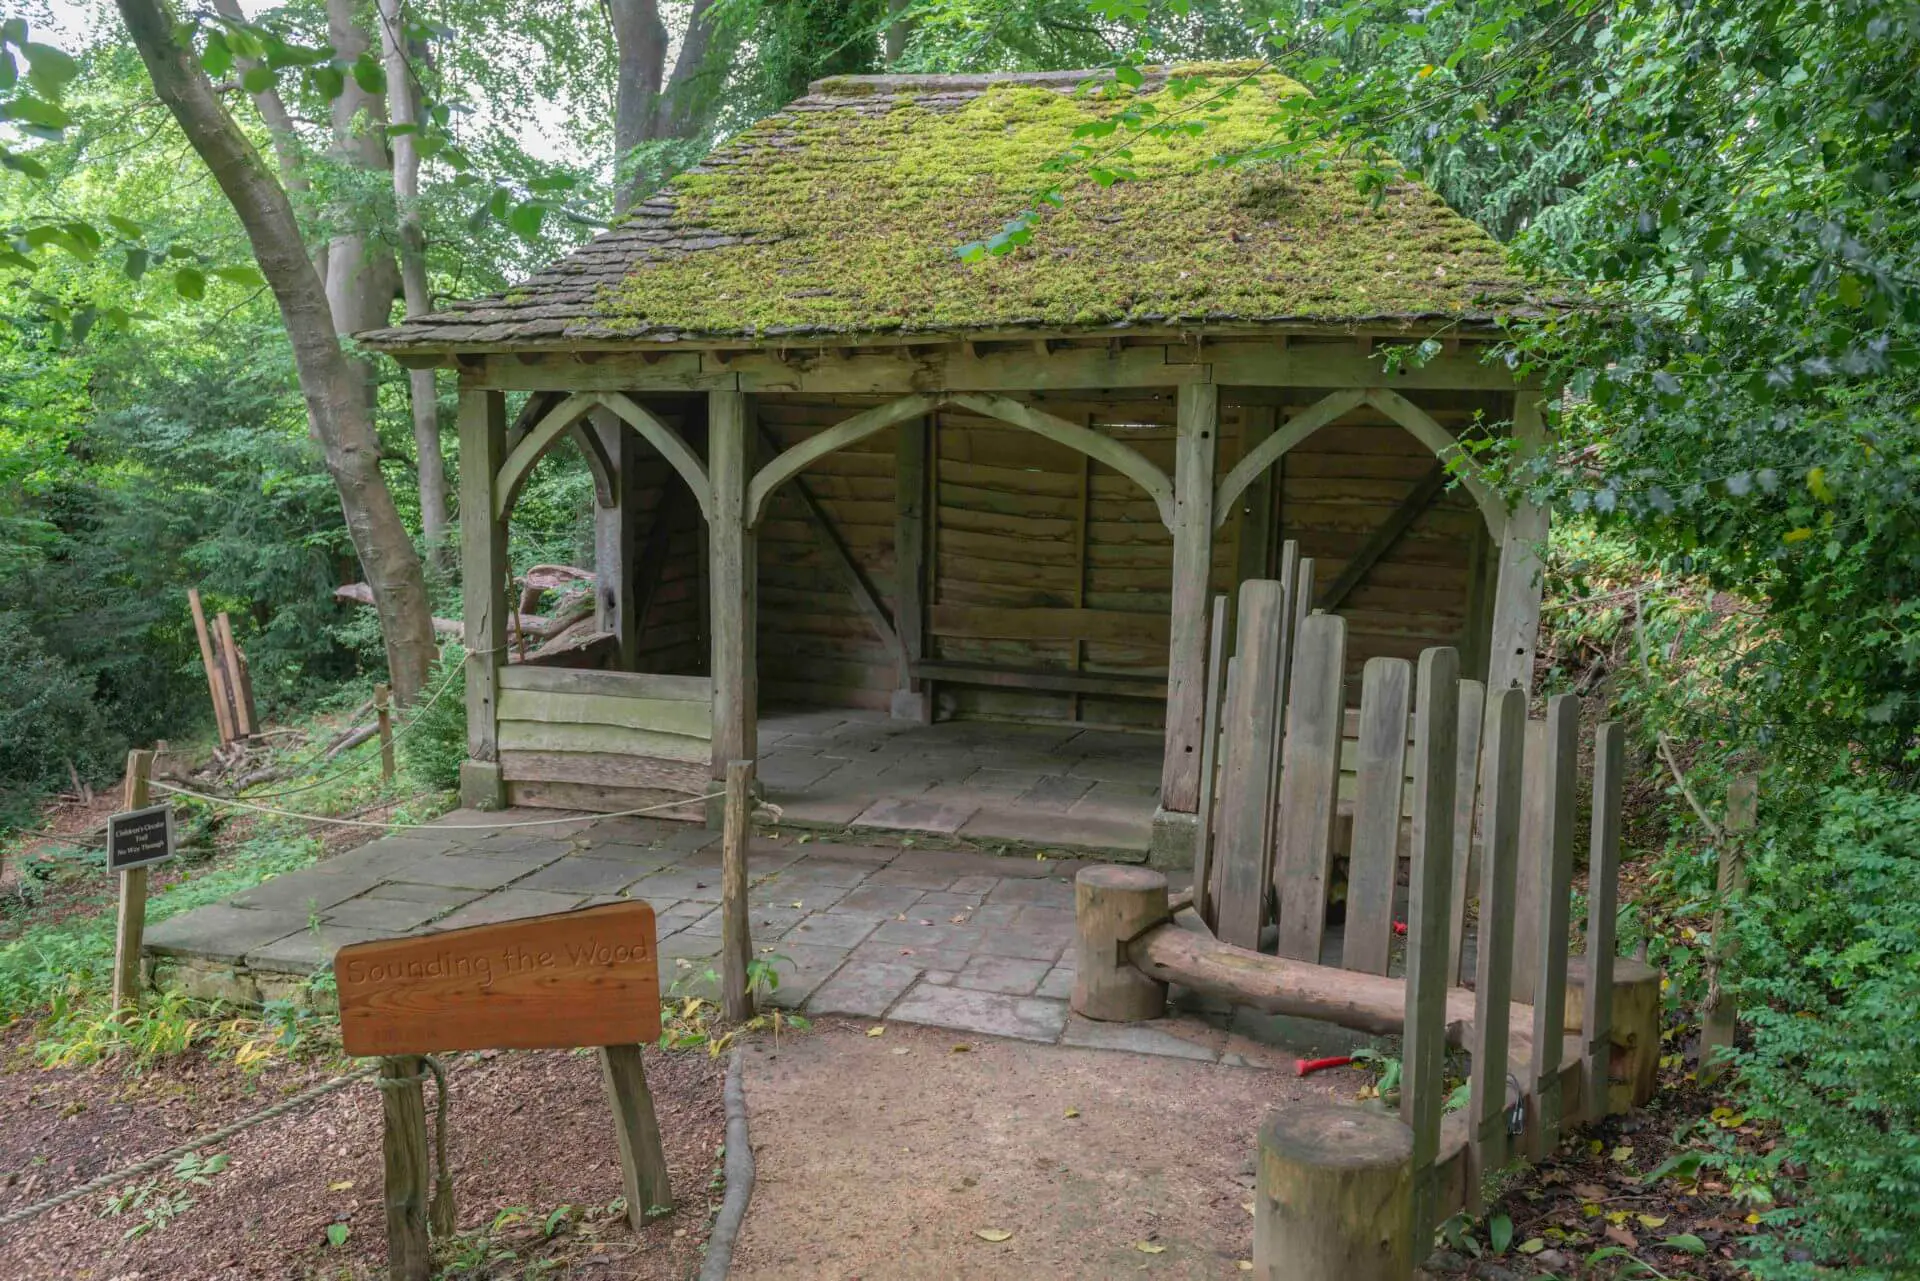 The Summerhouse at Prior Park Landscape Garden